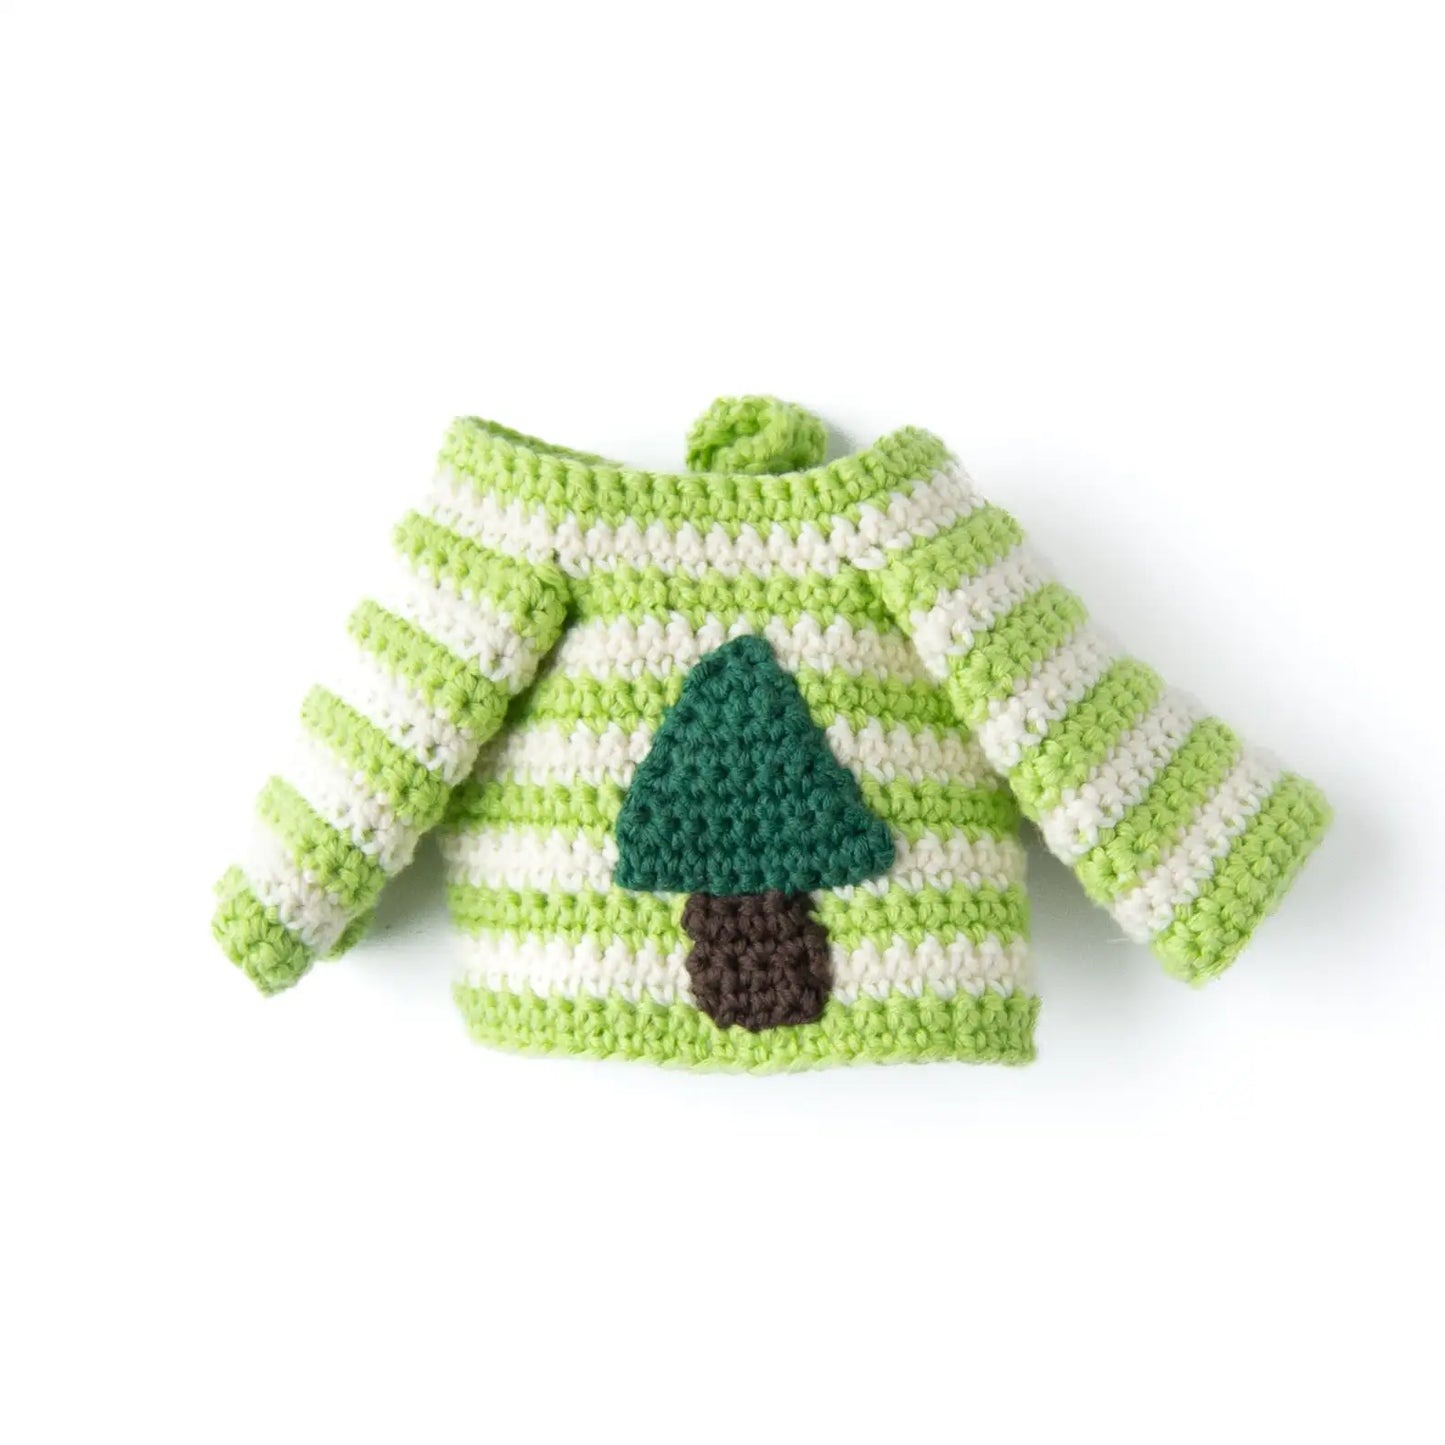 Sweater bundle | Crochet amigurumi PDF pattern